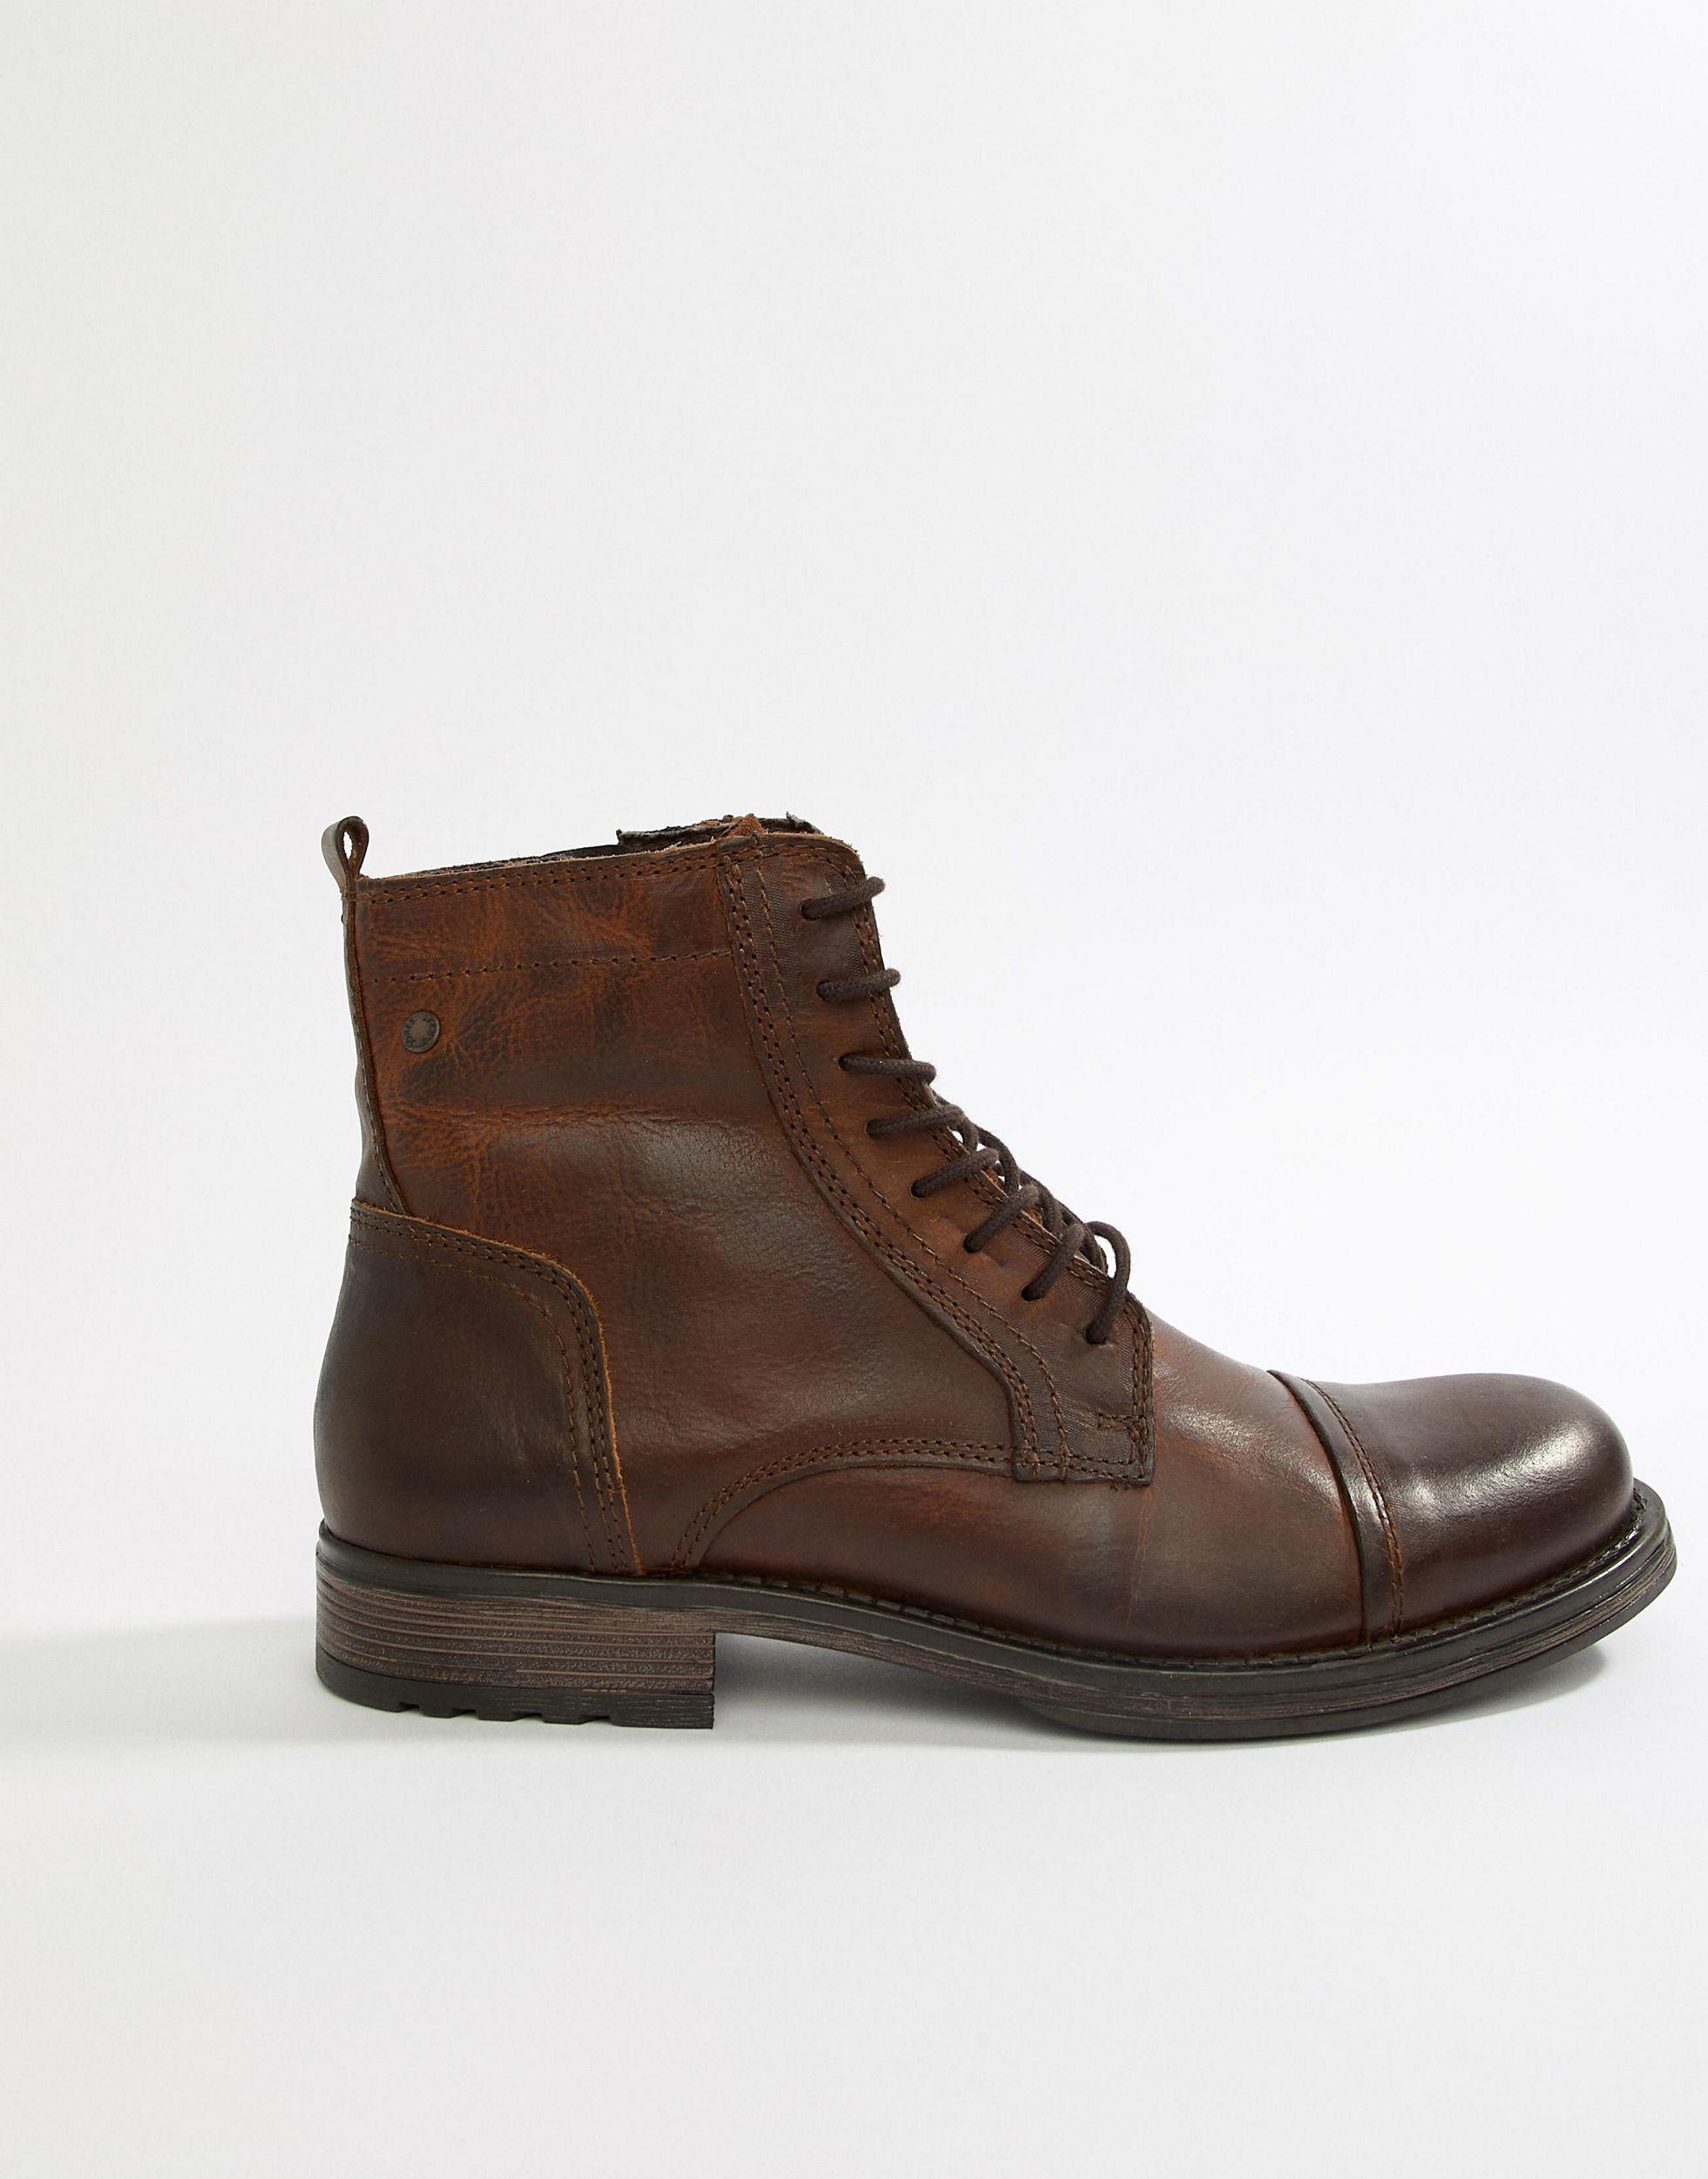 discount 57% Jack & Jones ankle boots MEN FASHION Footwear Basic Brown 43                  EU 